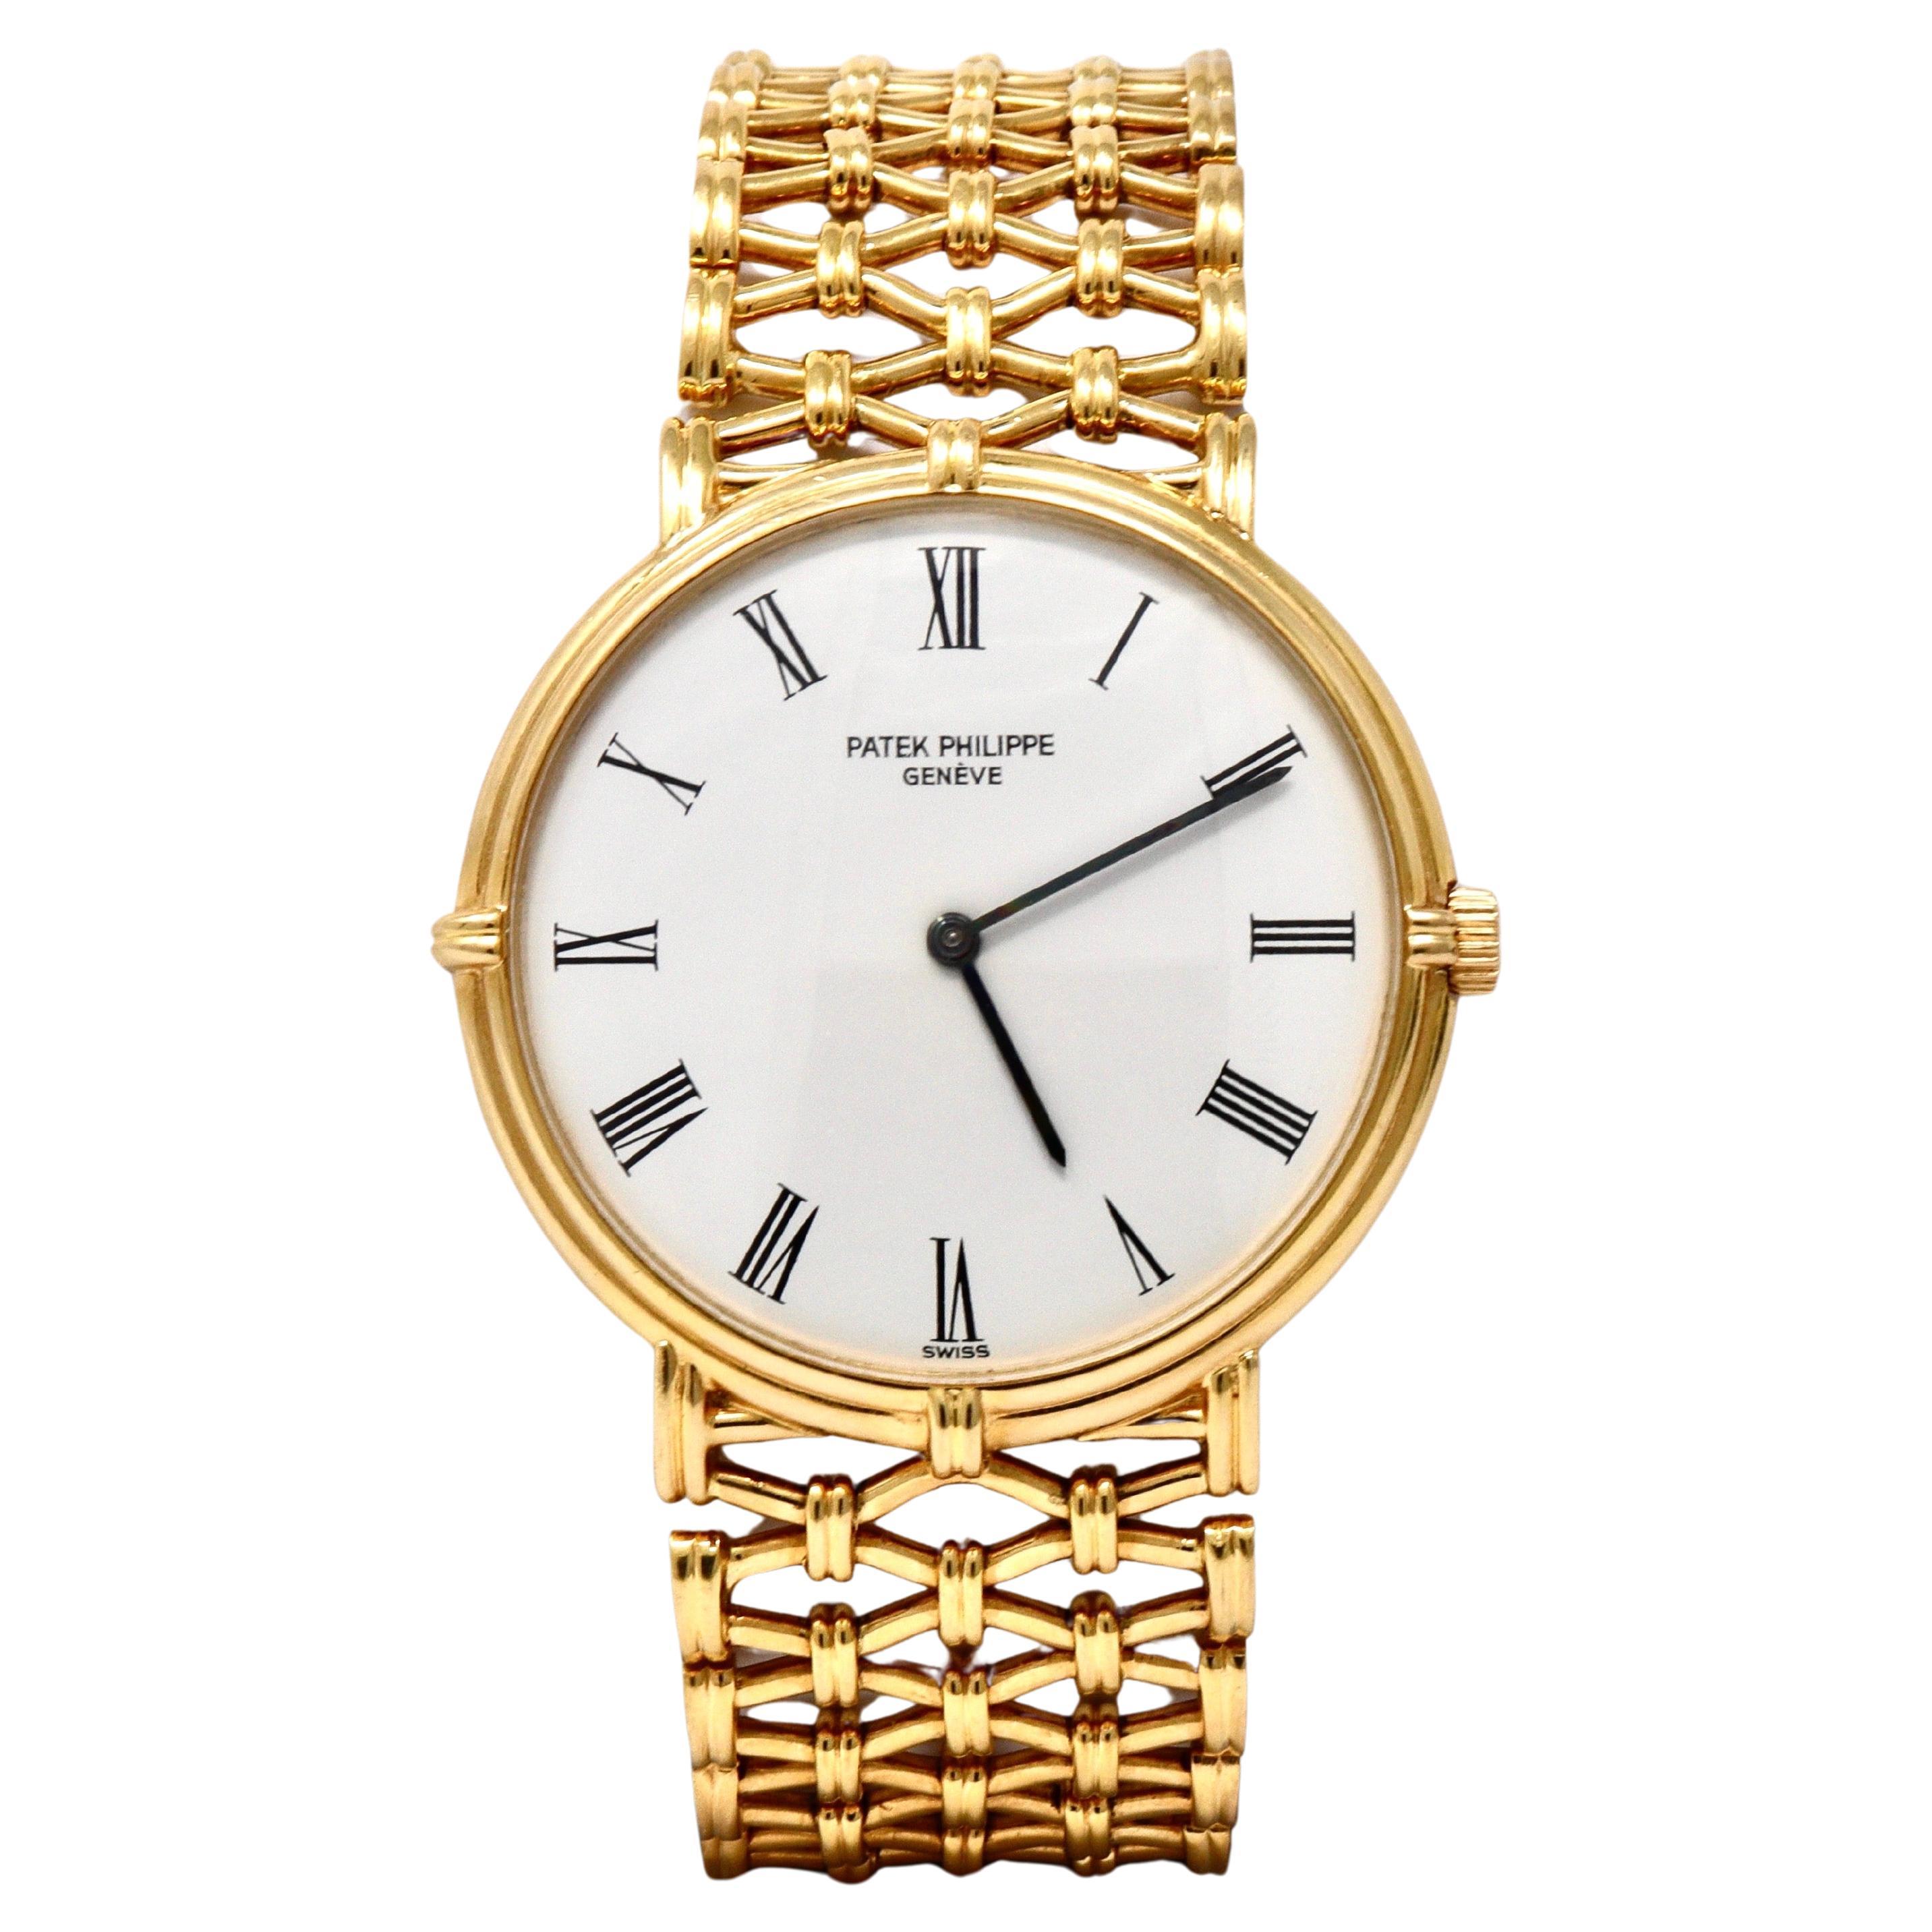 Patek Philippe, A Very Rare Calatrava 18K Yellow Gold Bracelet Watch, Ref 3821/1 For Sale